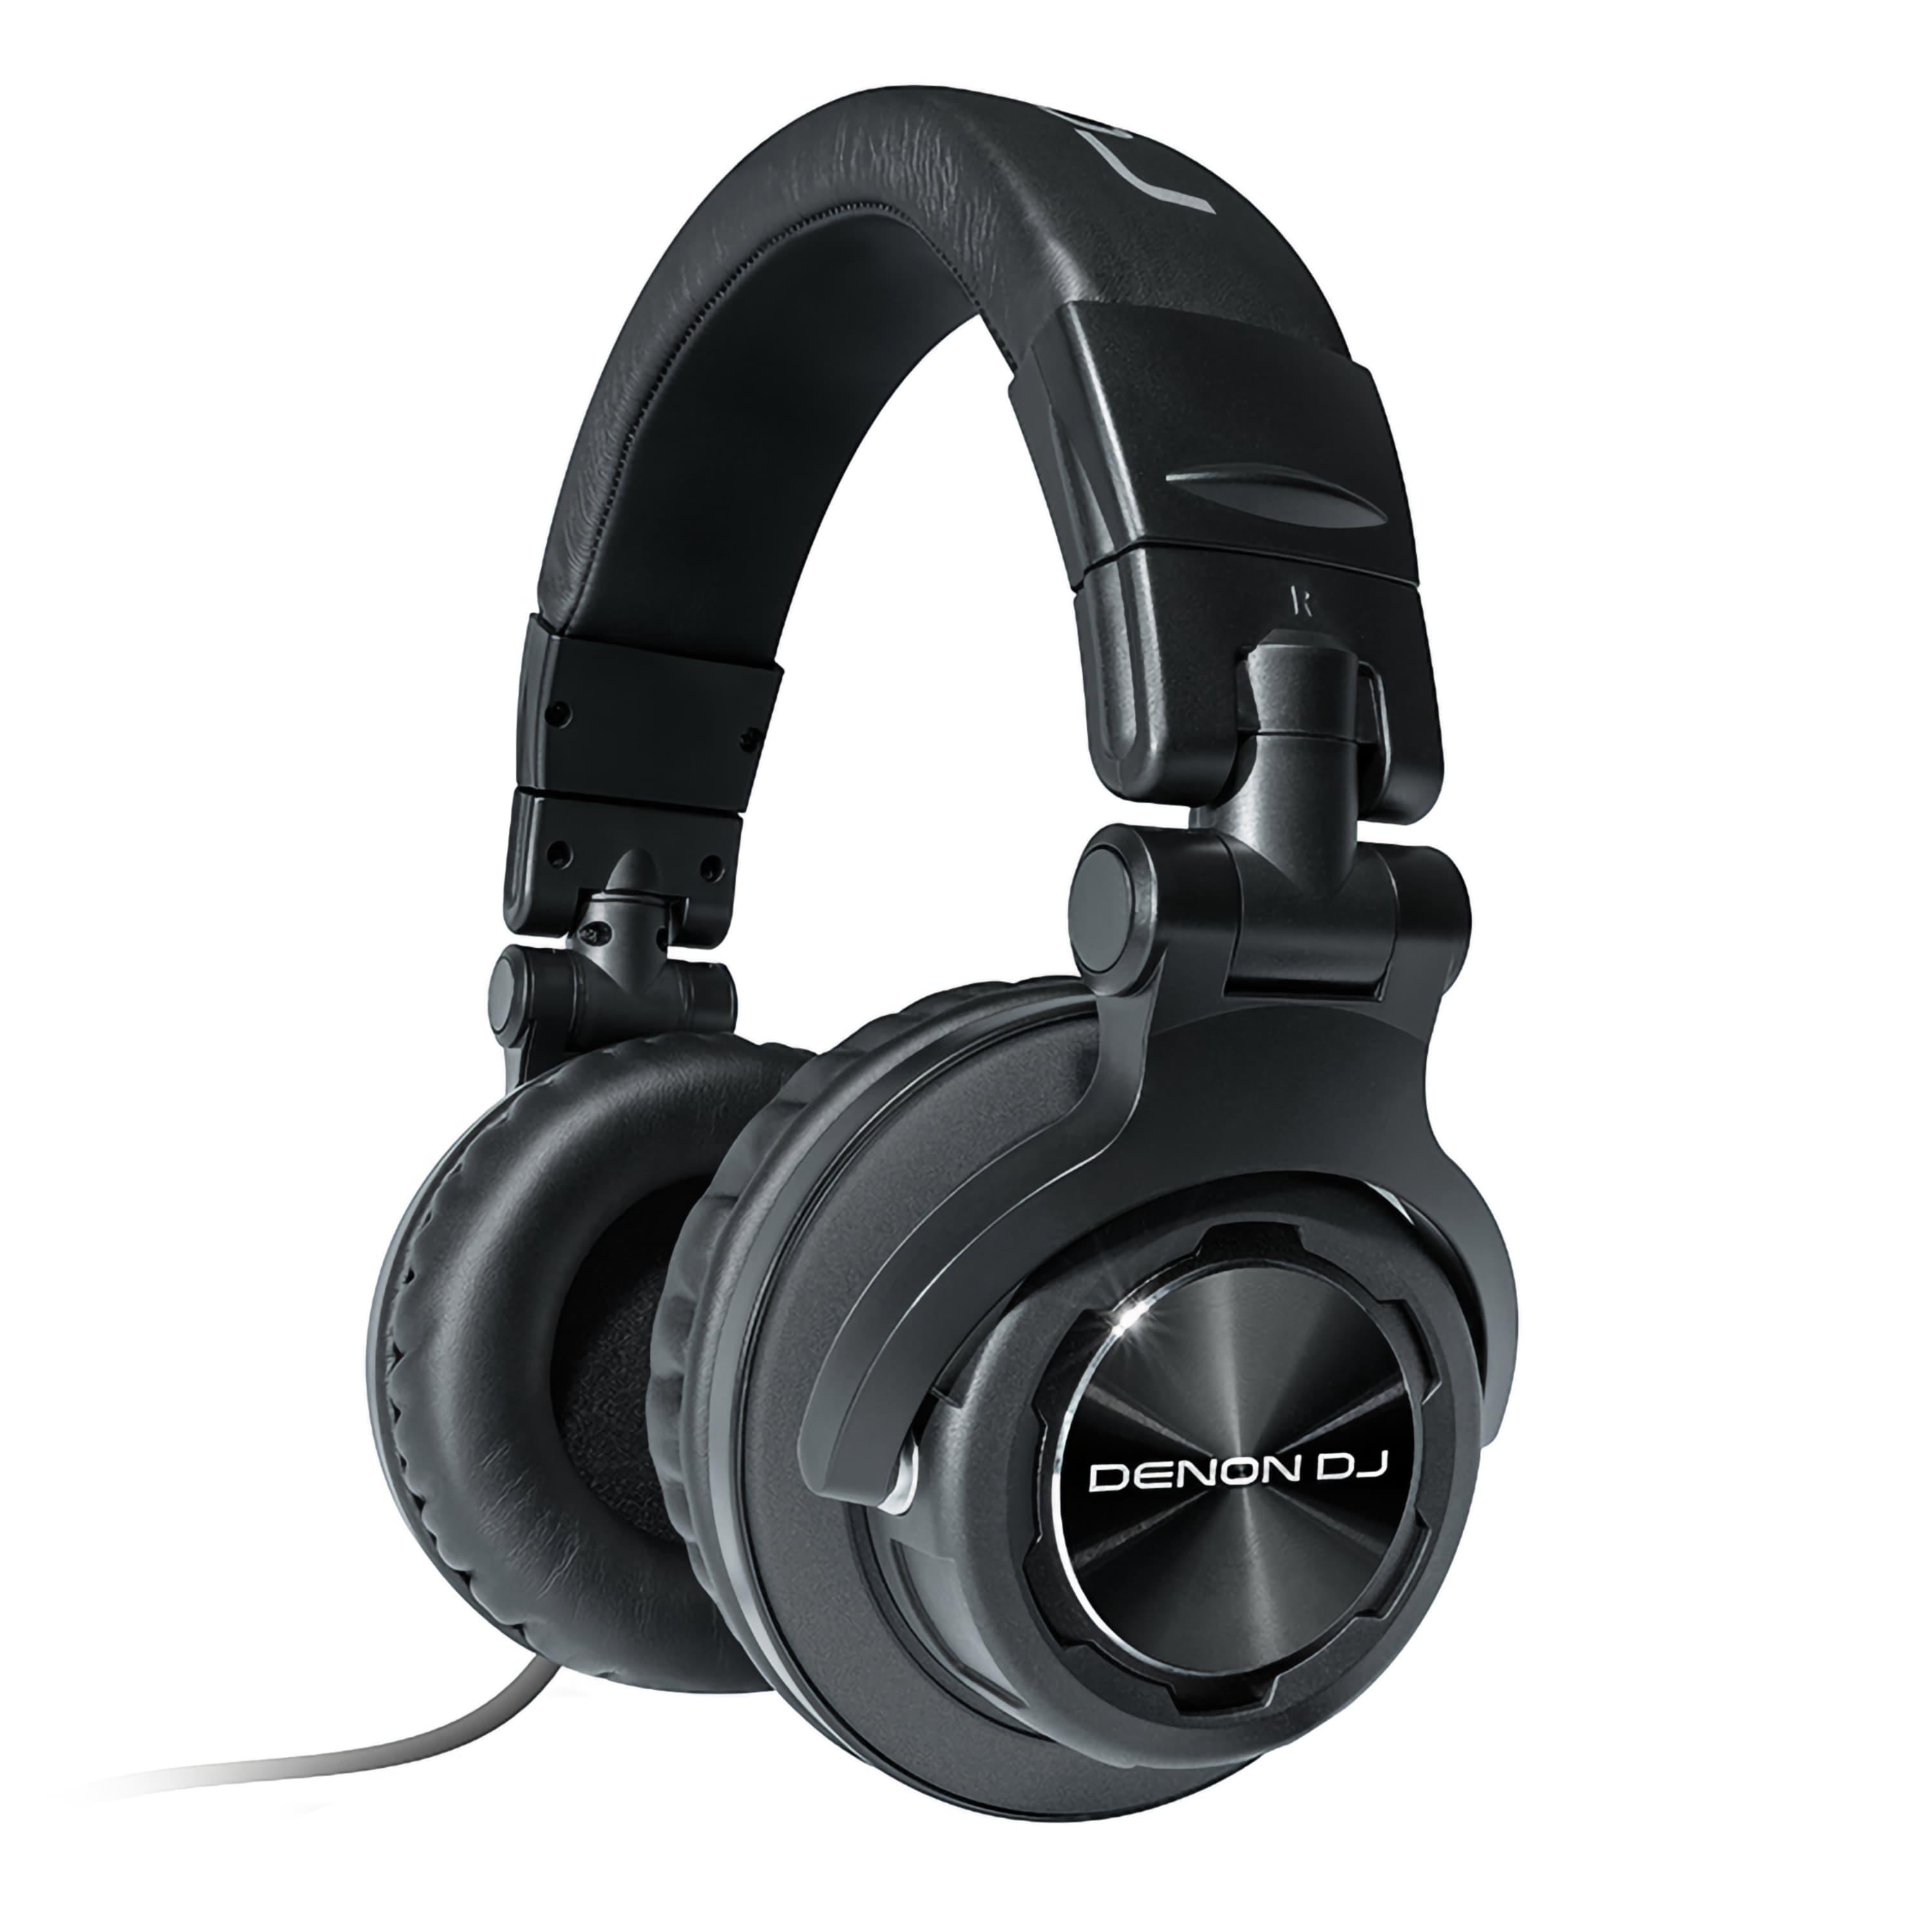 Denon DJ HP1100 headphones